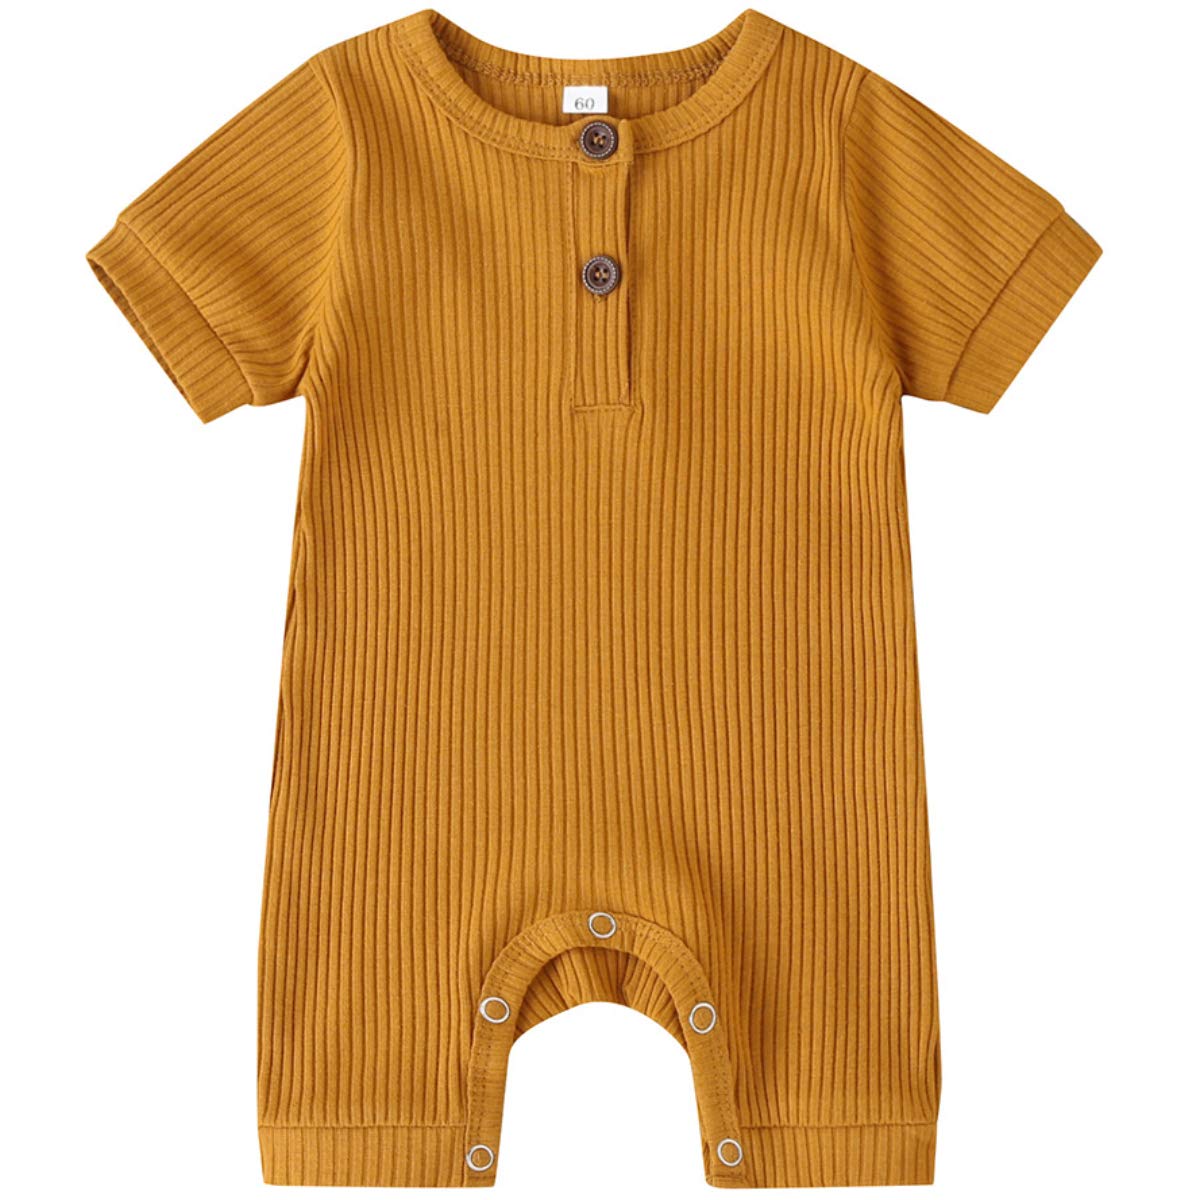 Kuriozud Newborn Infant Unisex Baby Boy Girl Button Solid Romper Bodysuit One Piece Jumpsuit Outfits Clothes (Short Sleeve Rompe